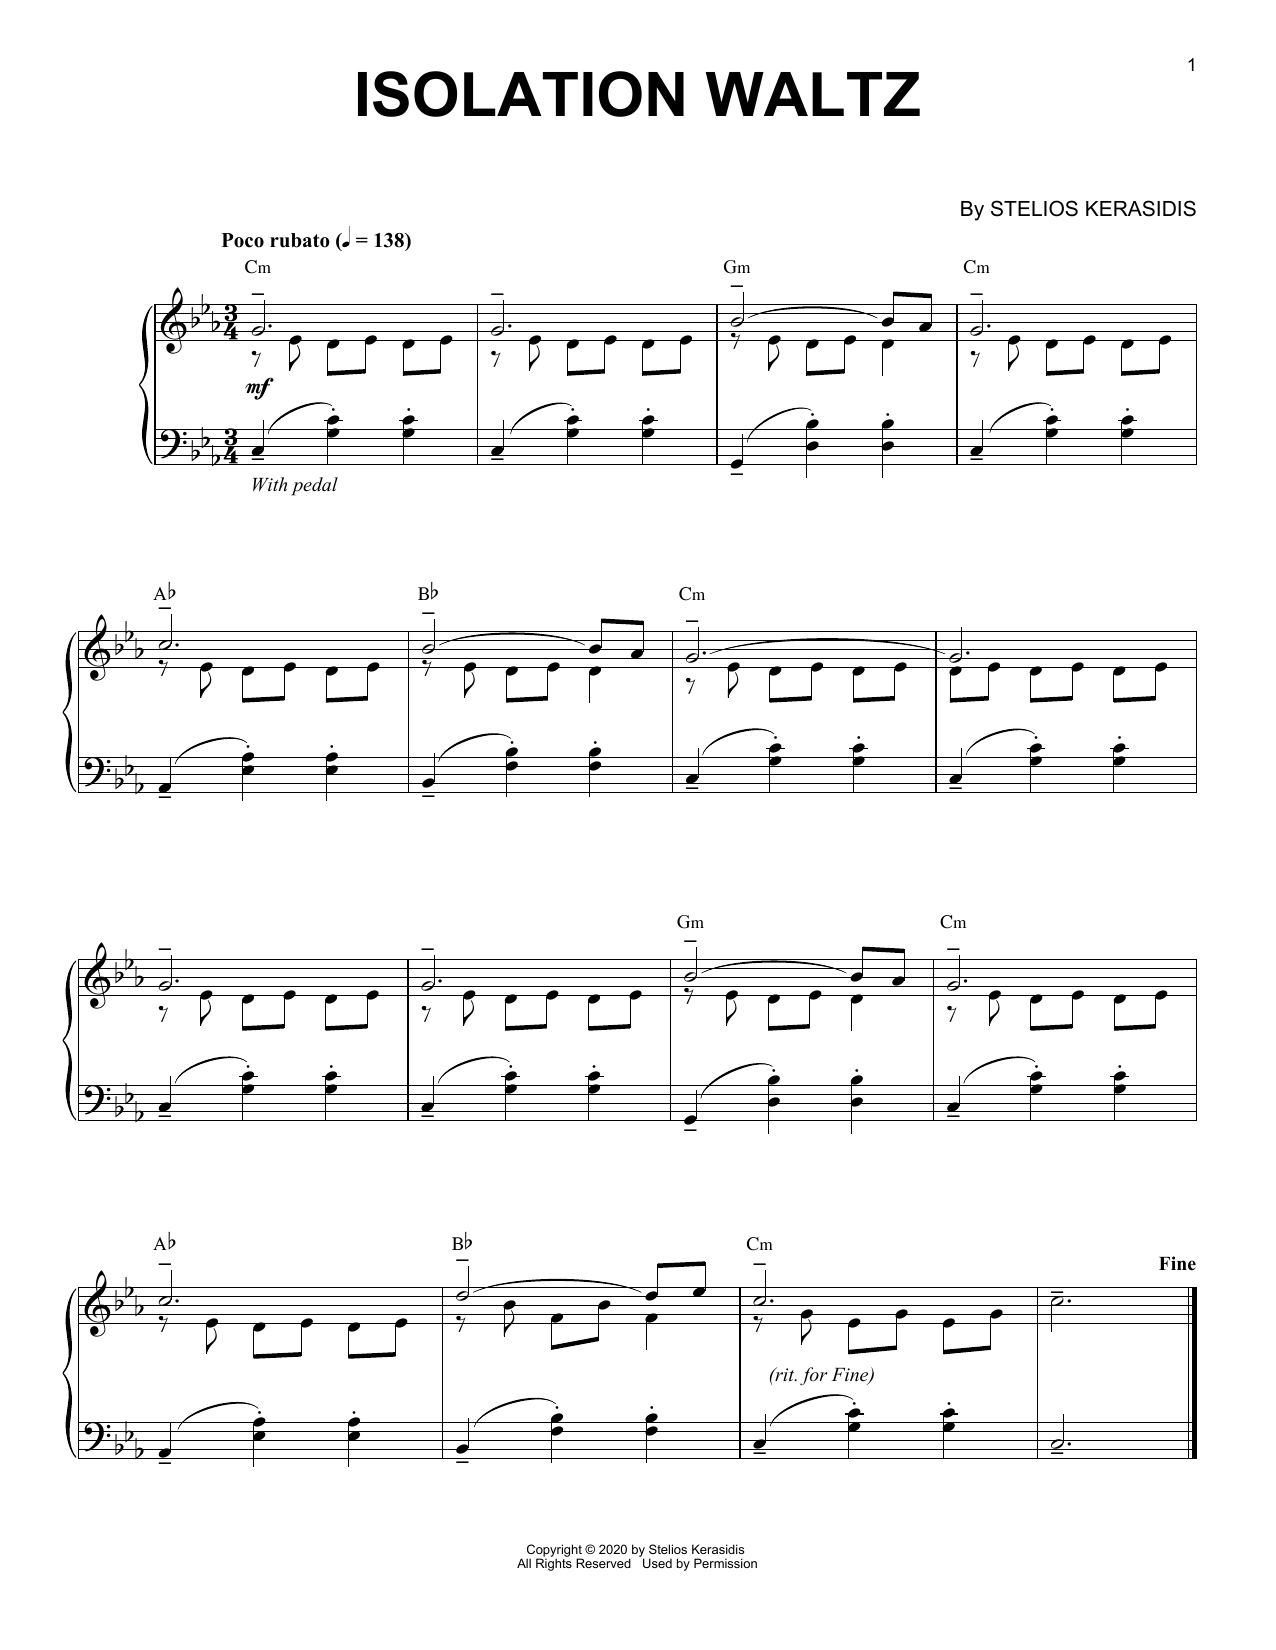 Stelios Kerasidis Isolation Waltz Sheet Music Notes & Chords for Piano Solo - Download or Print PDF